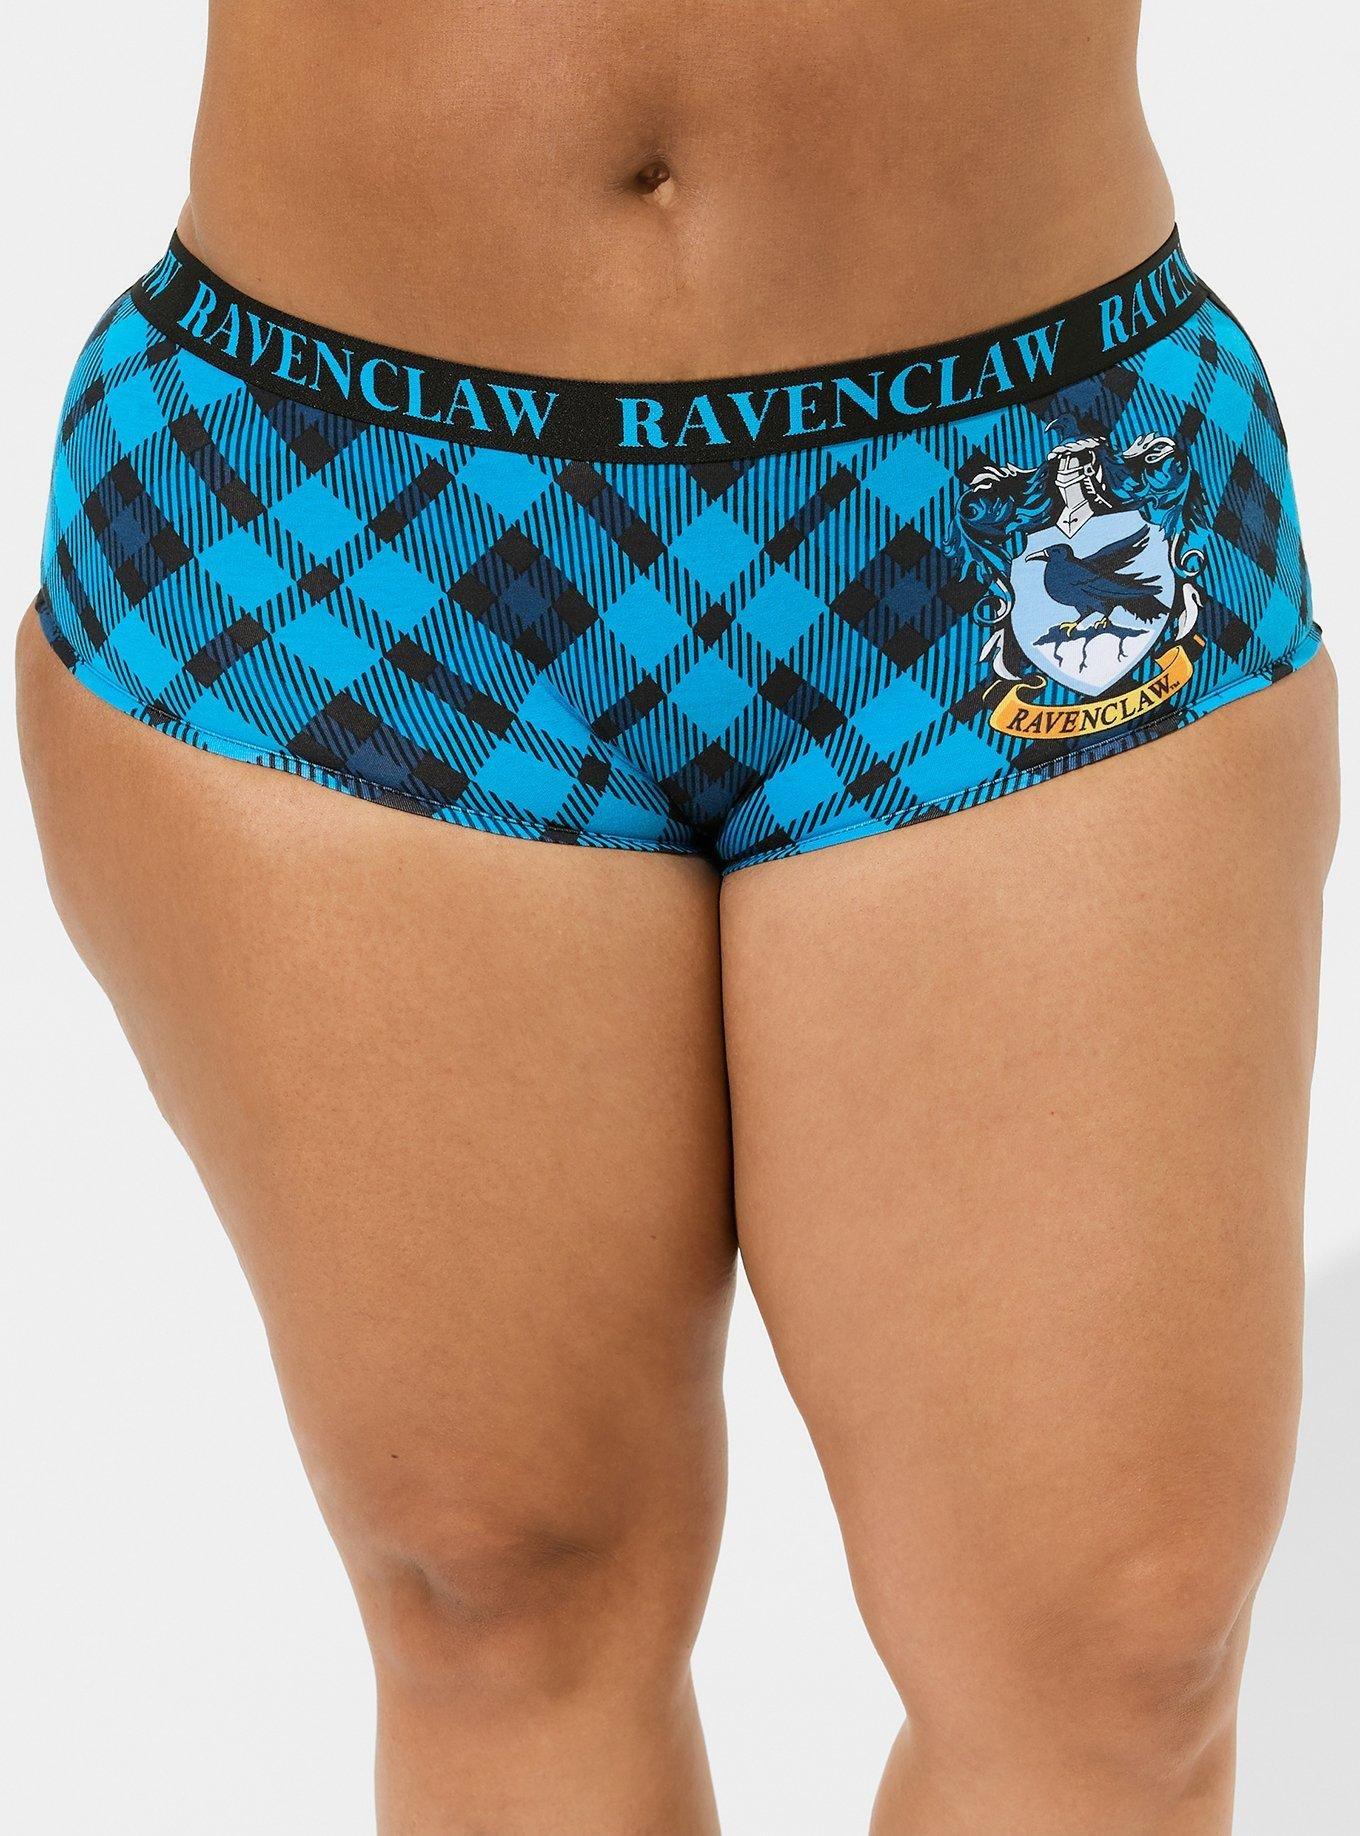 Plus Size - Harry Potter Ravenclaw Mid Rise Boyshort Panty - Torrid